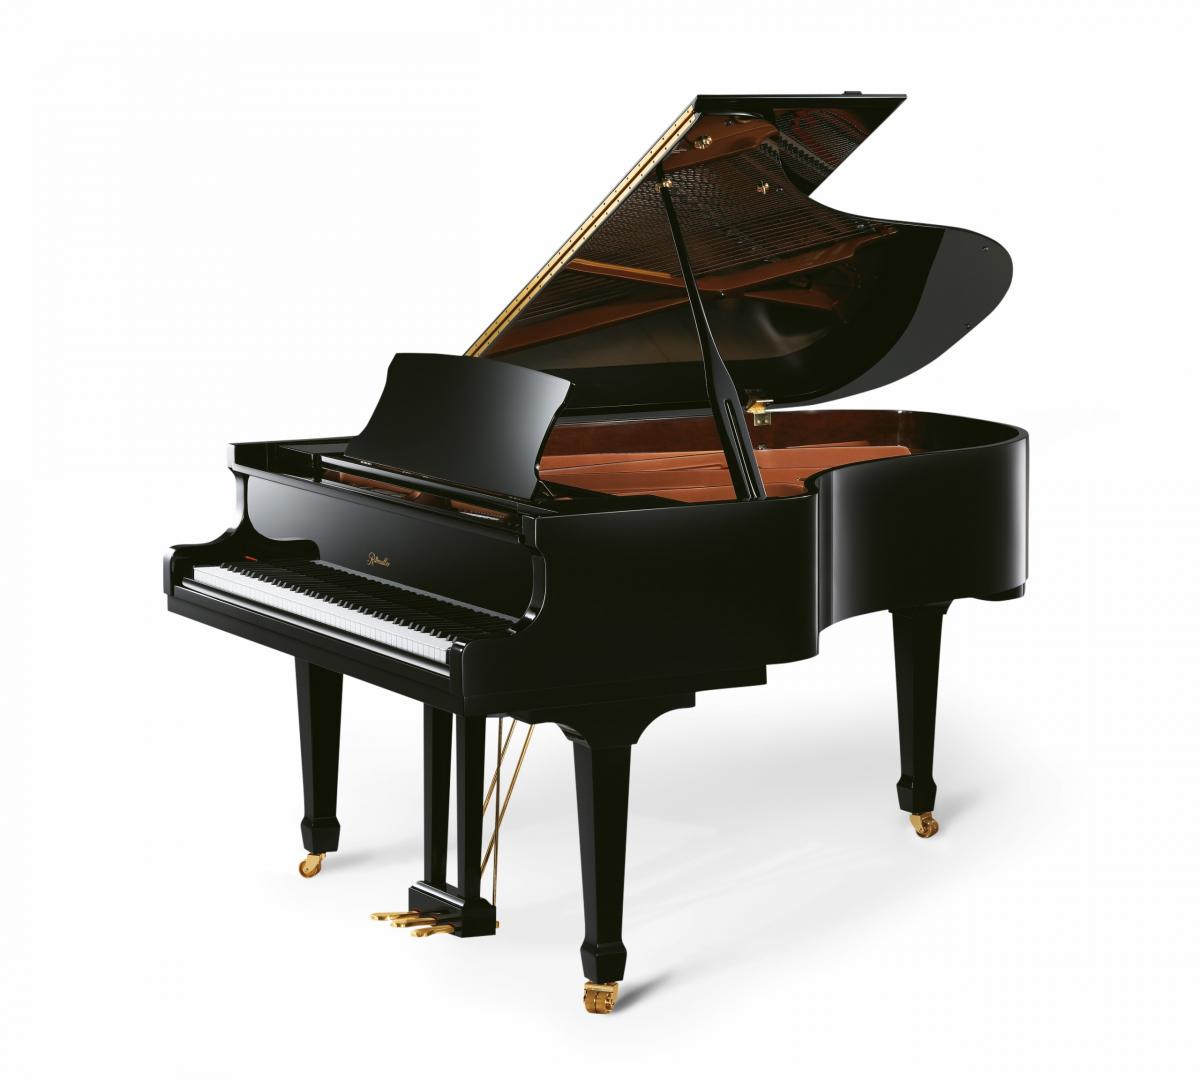 Ritmuller GH188R 6' 3" grand piano